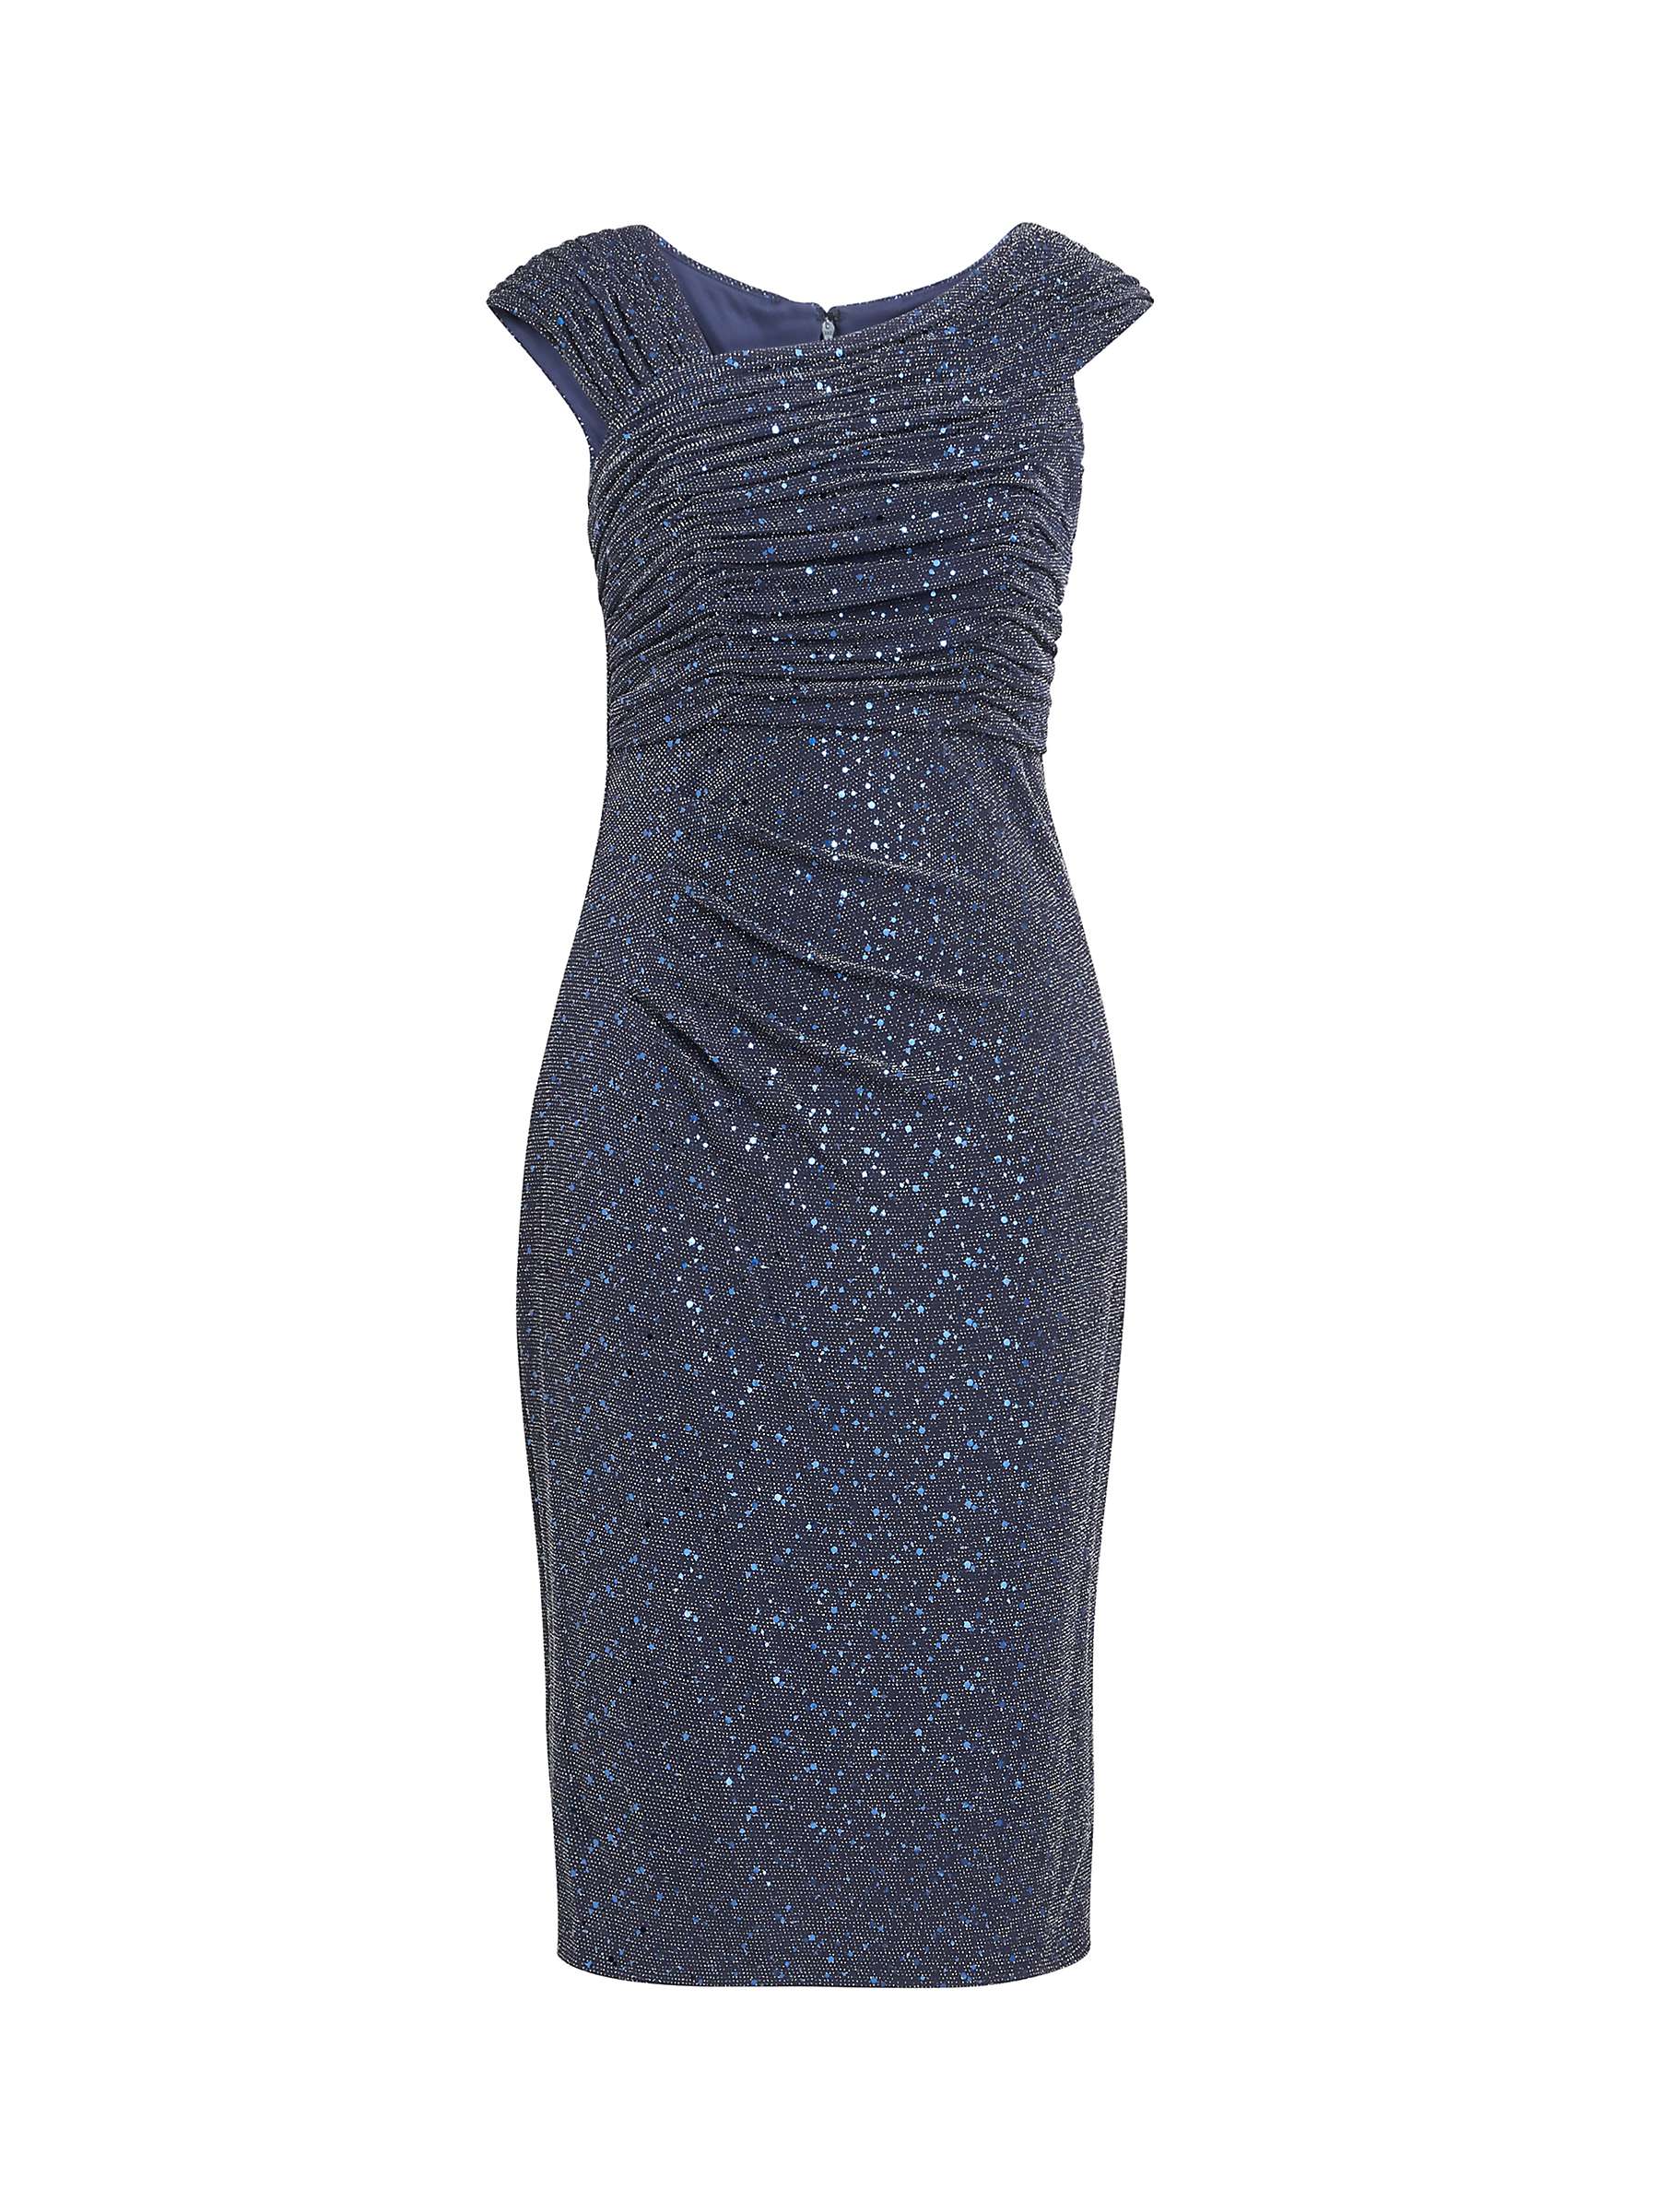 Buy Gina Bacconi Celia Metallic Sleeveless Dress, Navy/Silver Online at johnlewis.com